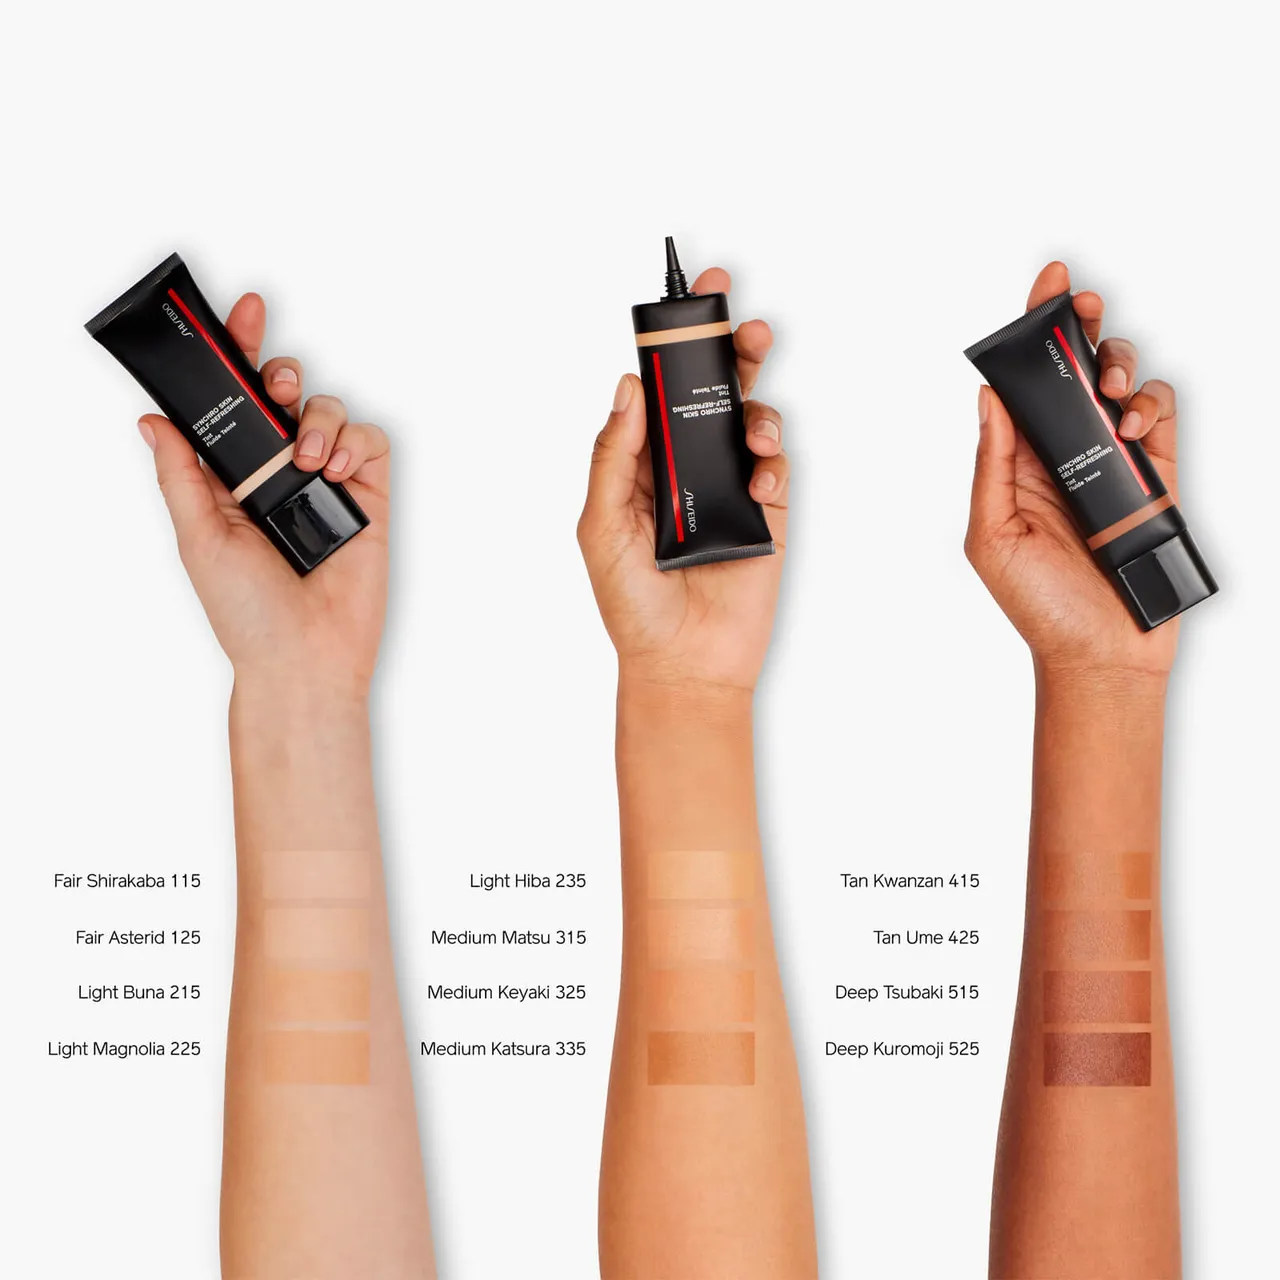 Shiseido Synchro Skin Self Refreshing Tint 30ml (Various Shades) - Light Magnolia